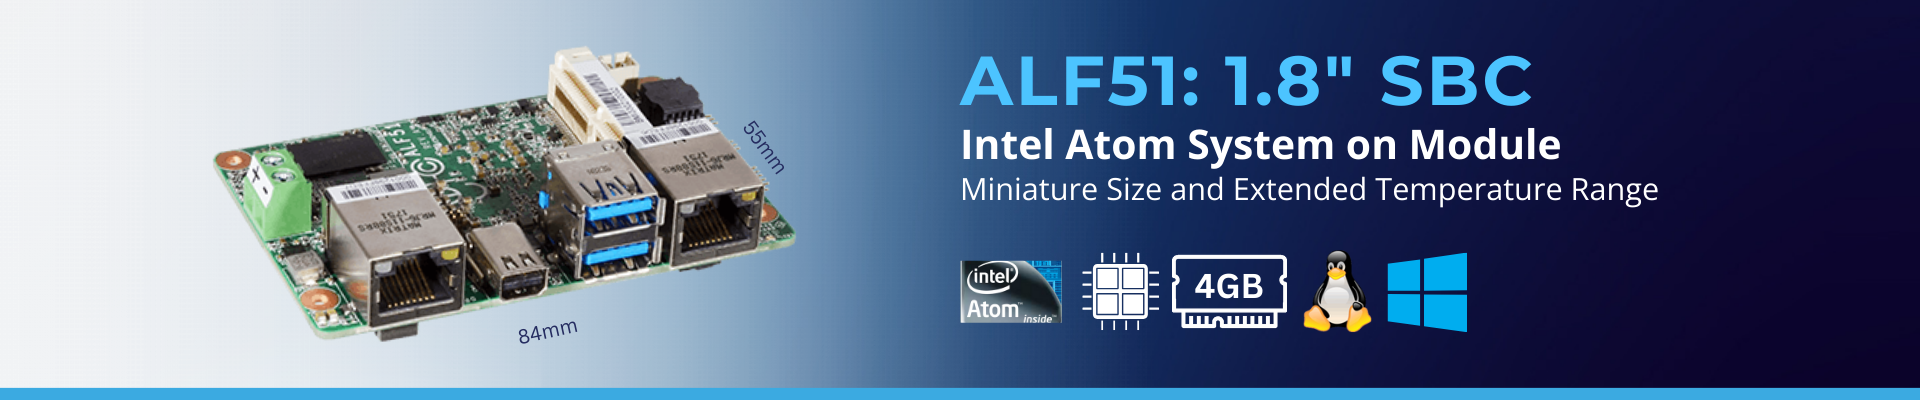 ALF51: Intel Atom 1.8inch SBC